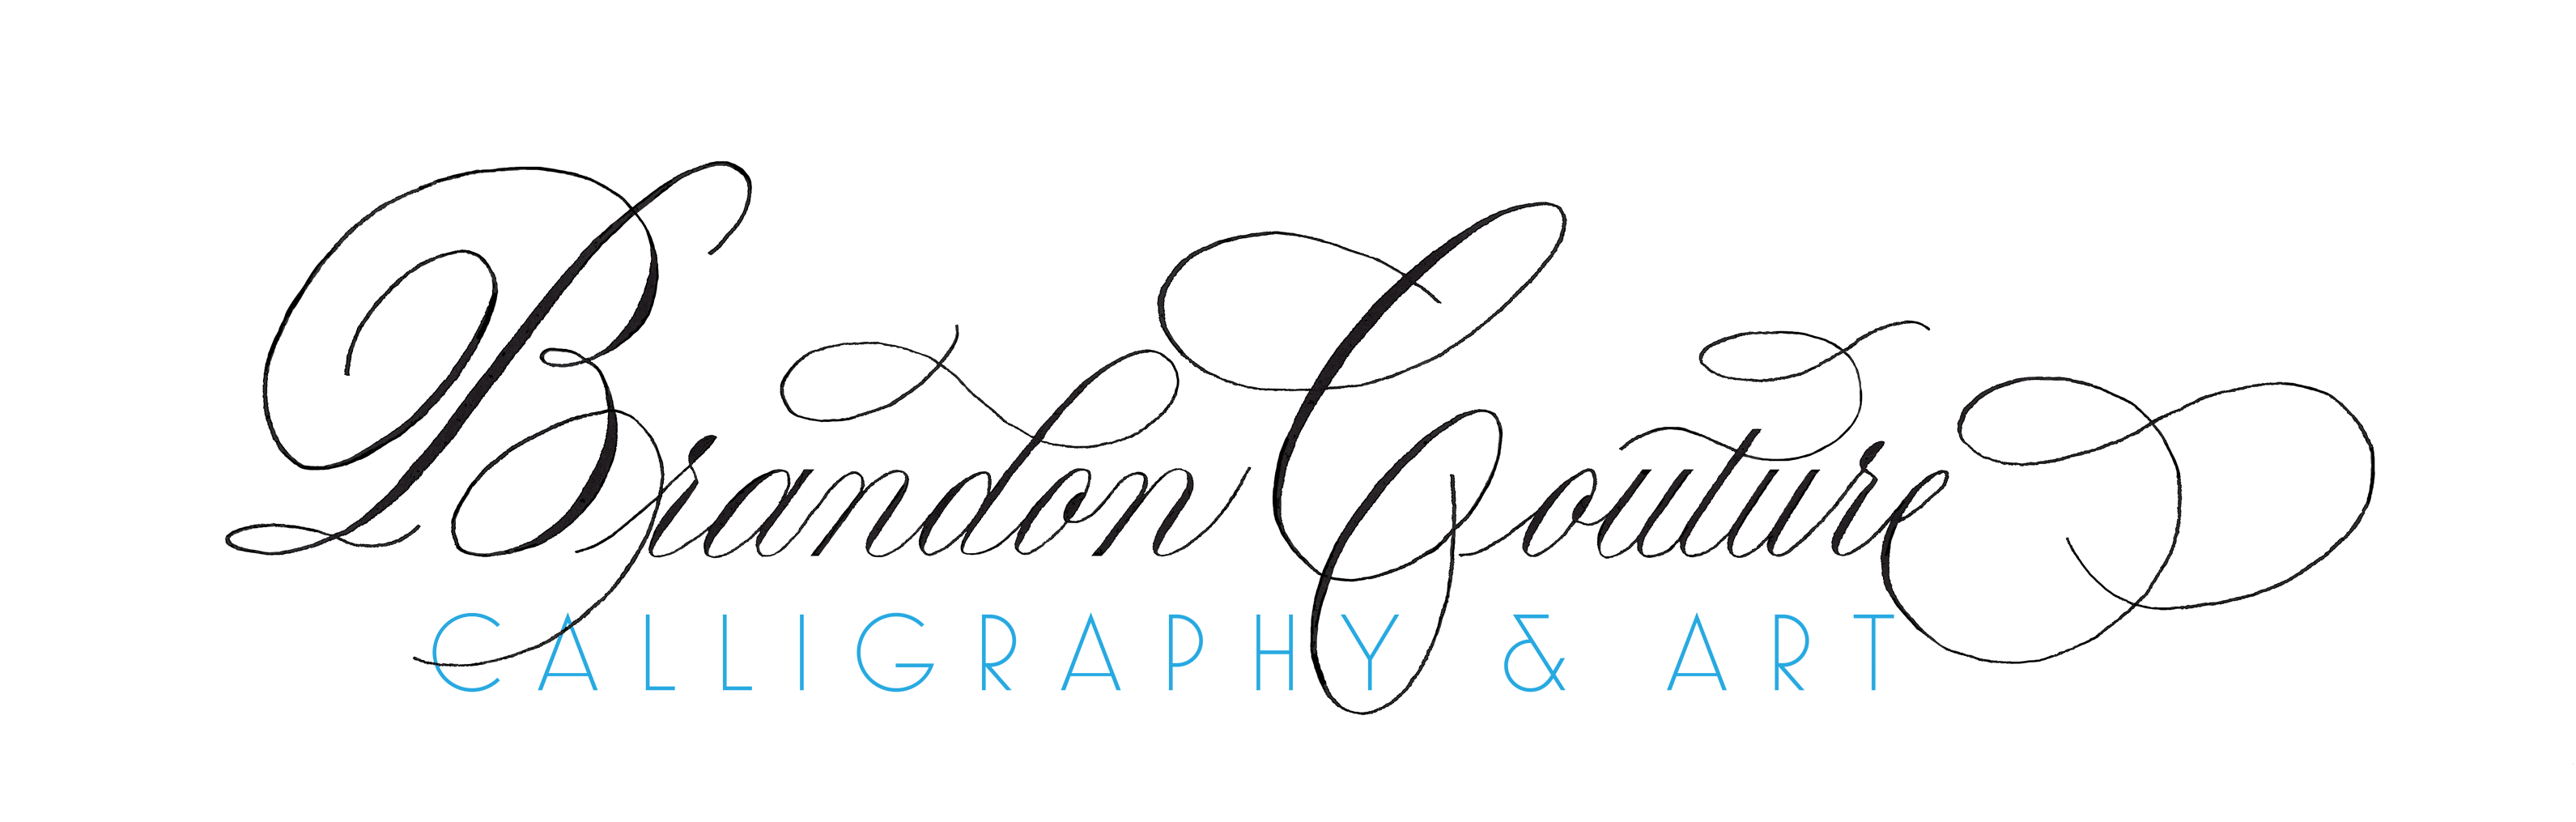 Brandon Couture Calligraphy